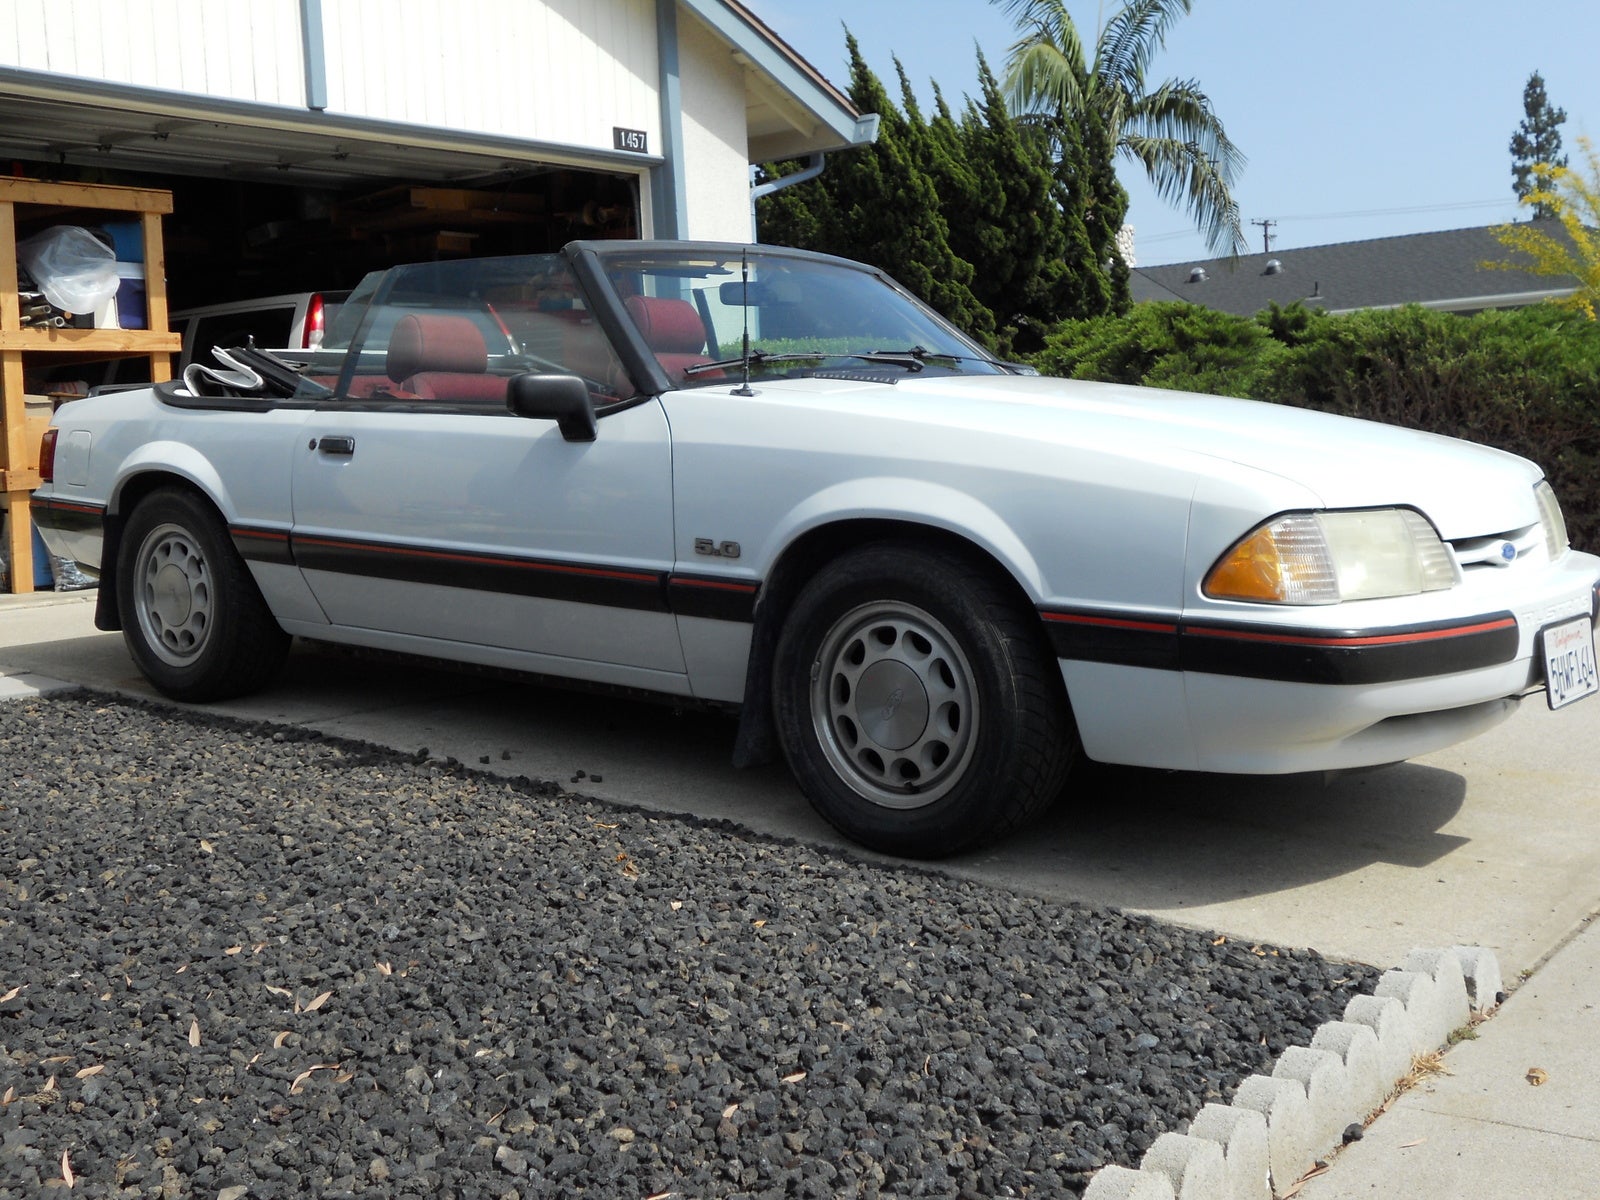 1989 Mustang Lx Convertible 5.0